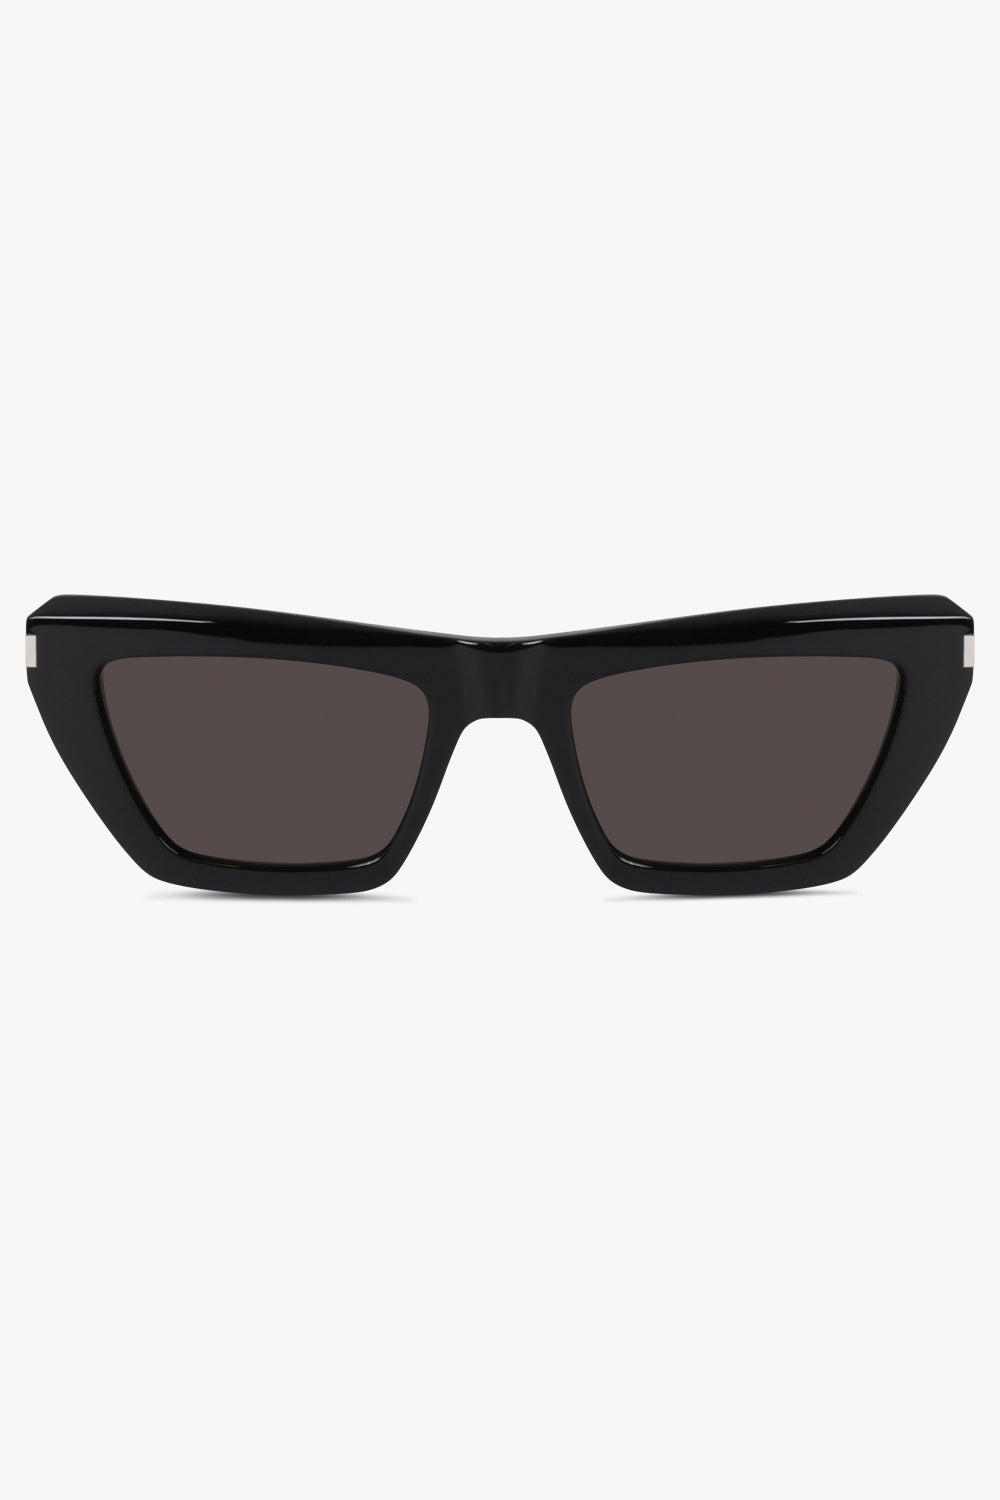 SAINT LAURENT ACCESSORIES BLACK / BLACK-BLACK-BLACK SL 467 Cat Eye Sunglasses | Black